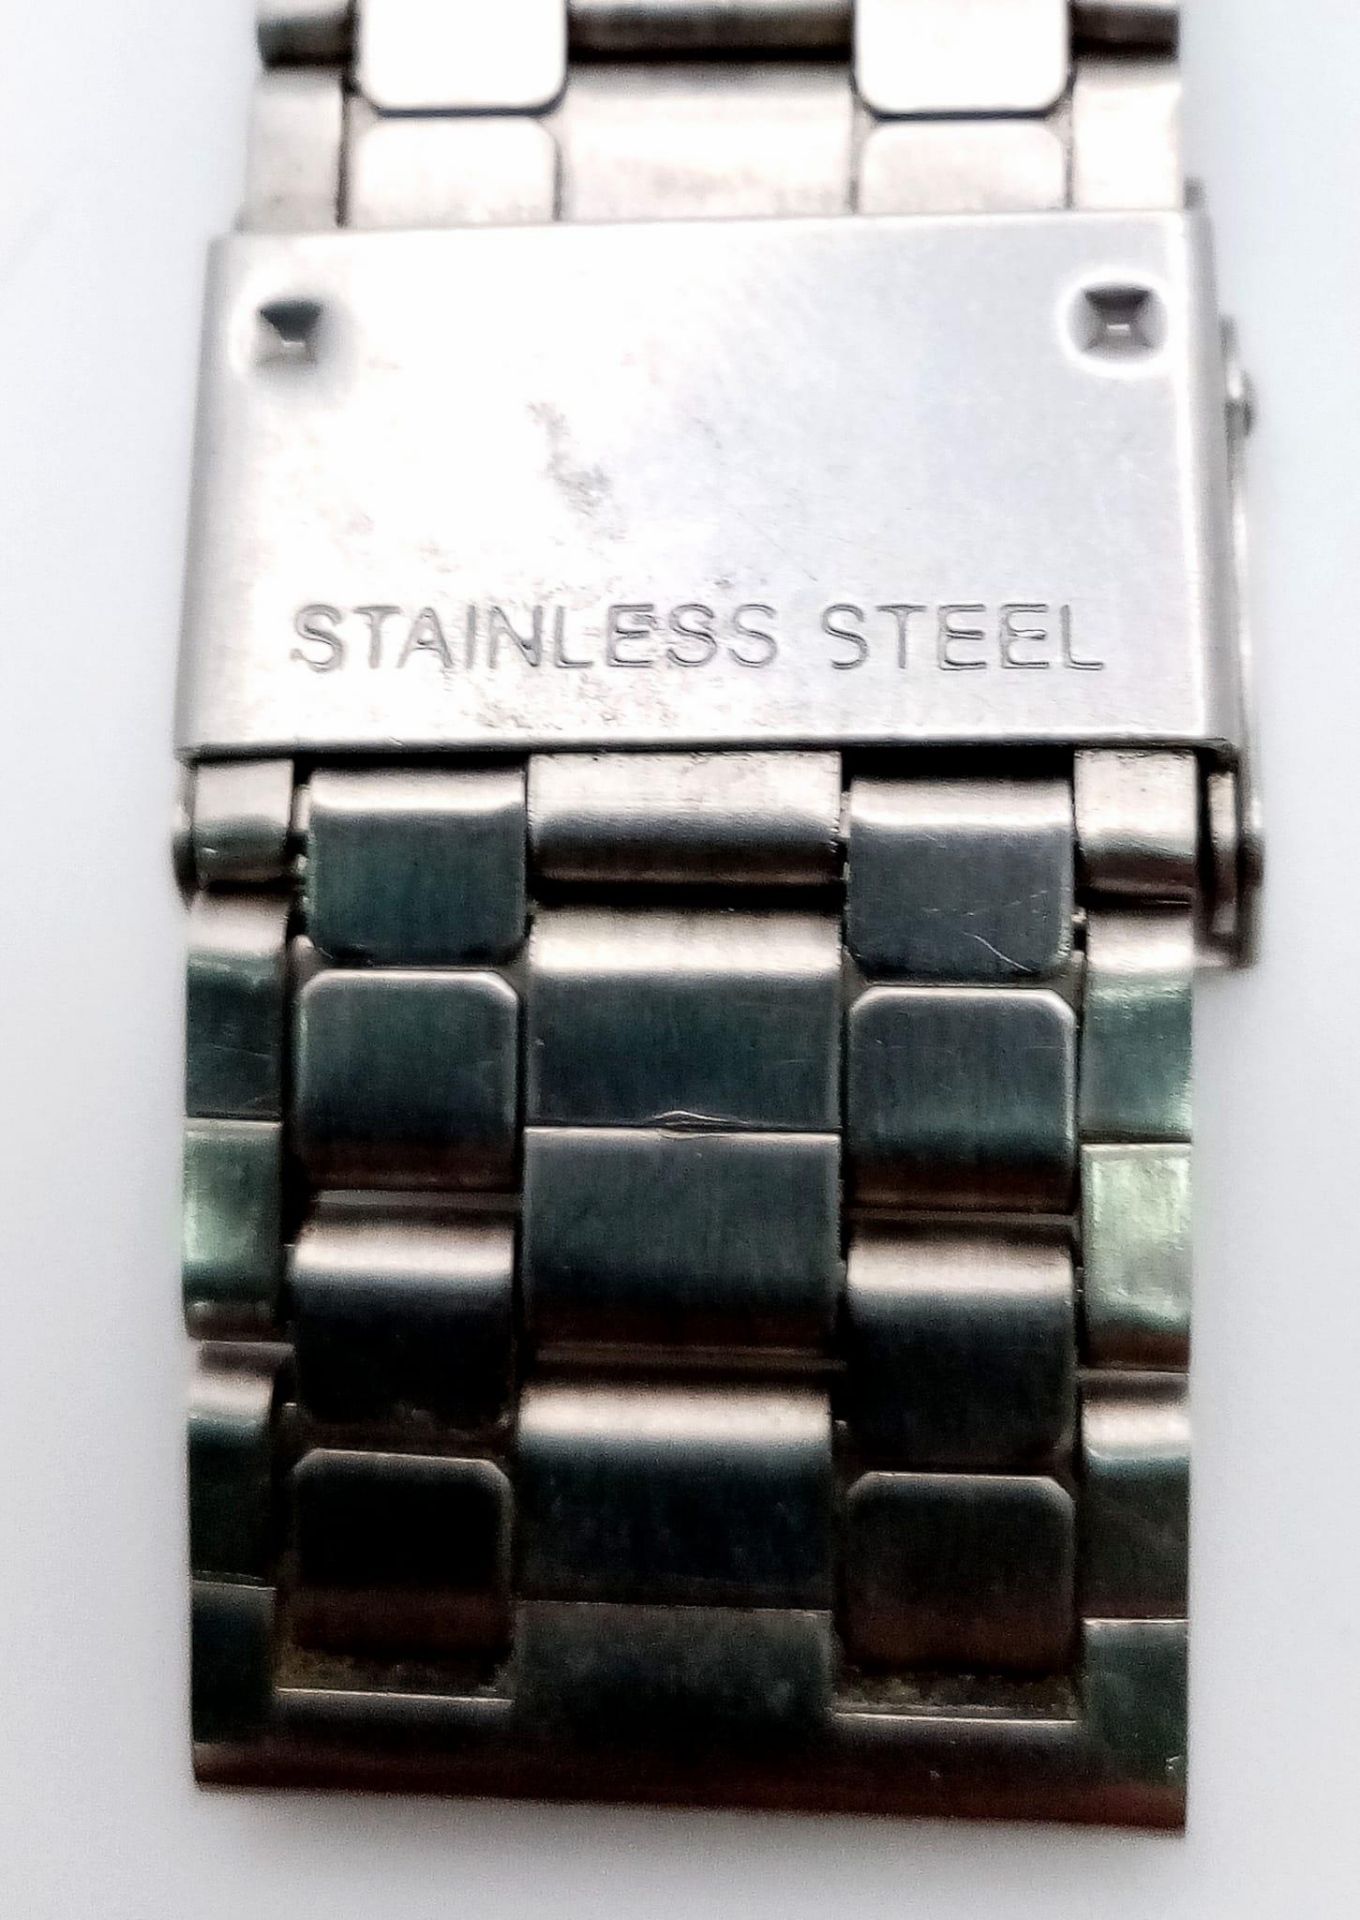 A Casio Quartz Gents Watch. Stainless steel bracelet and case - 44mm. Black dial with date window. - Bild 4 aus 6